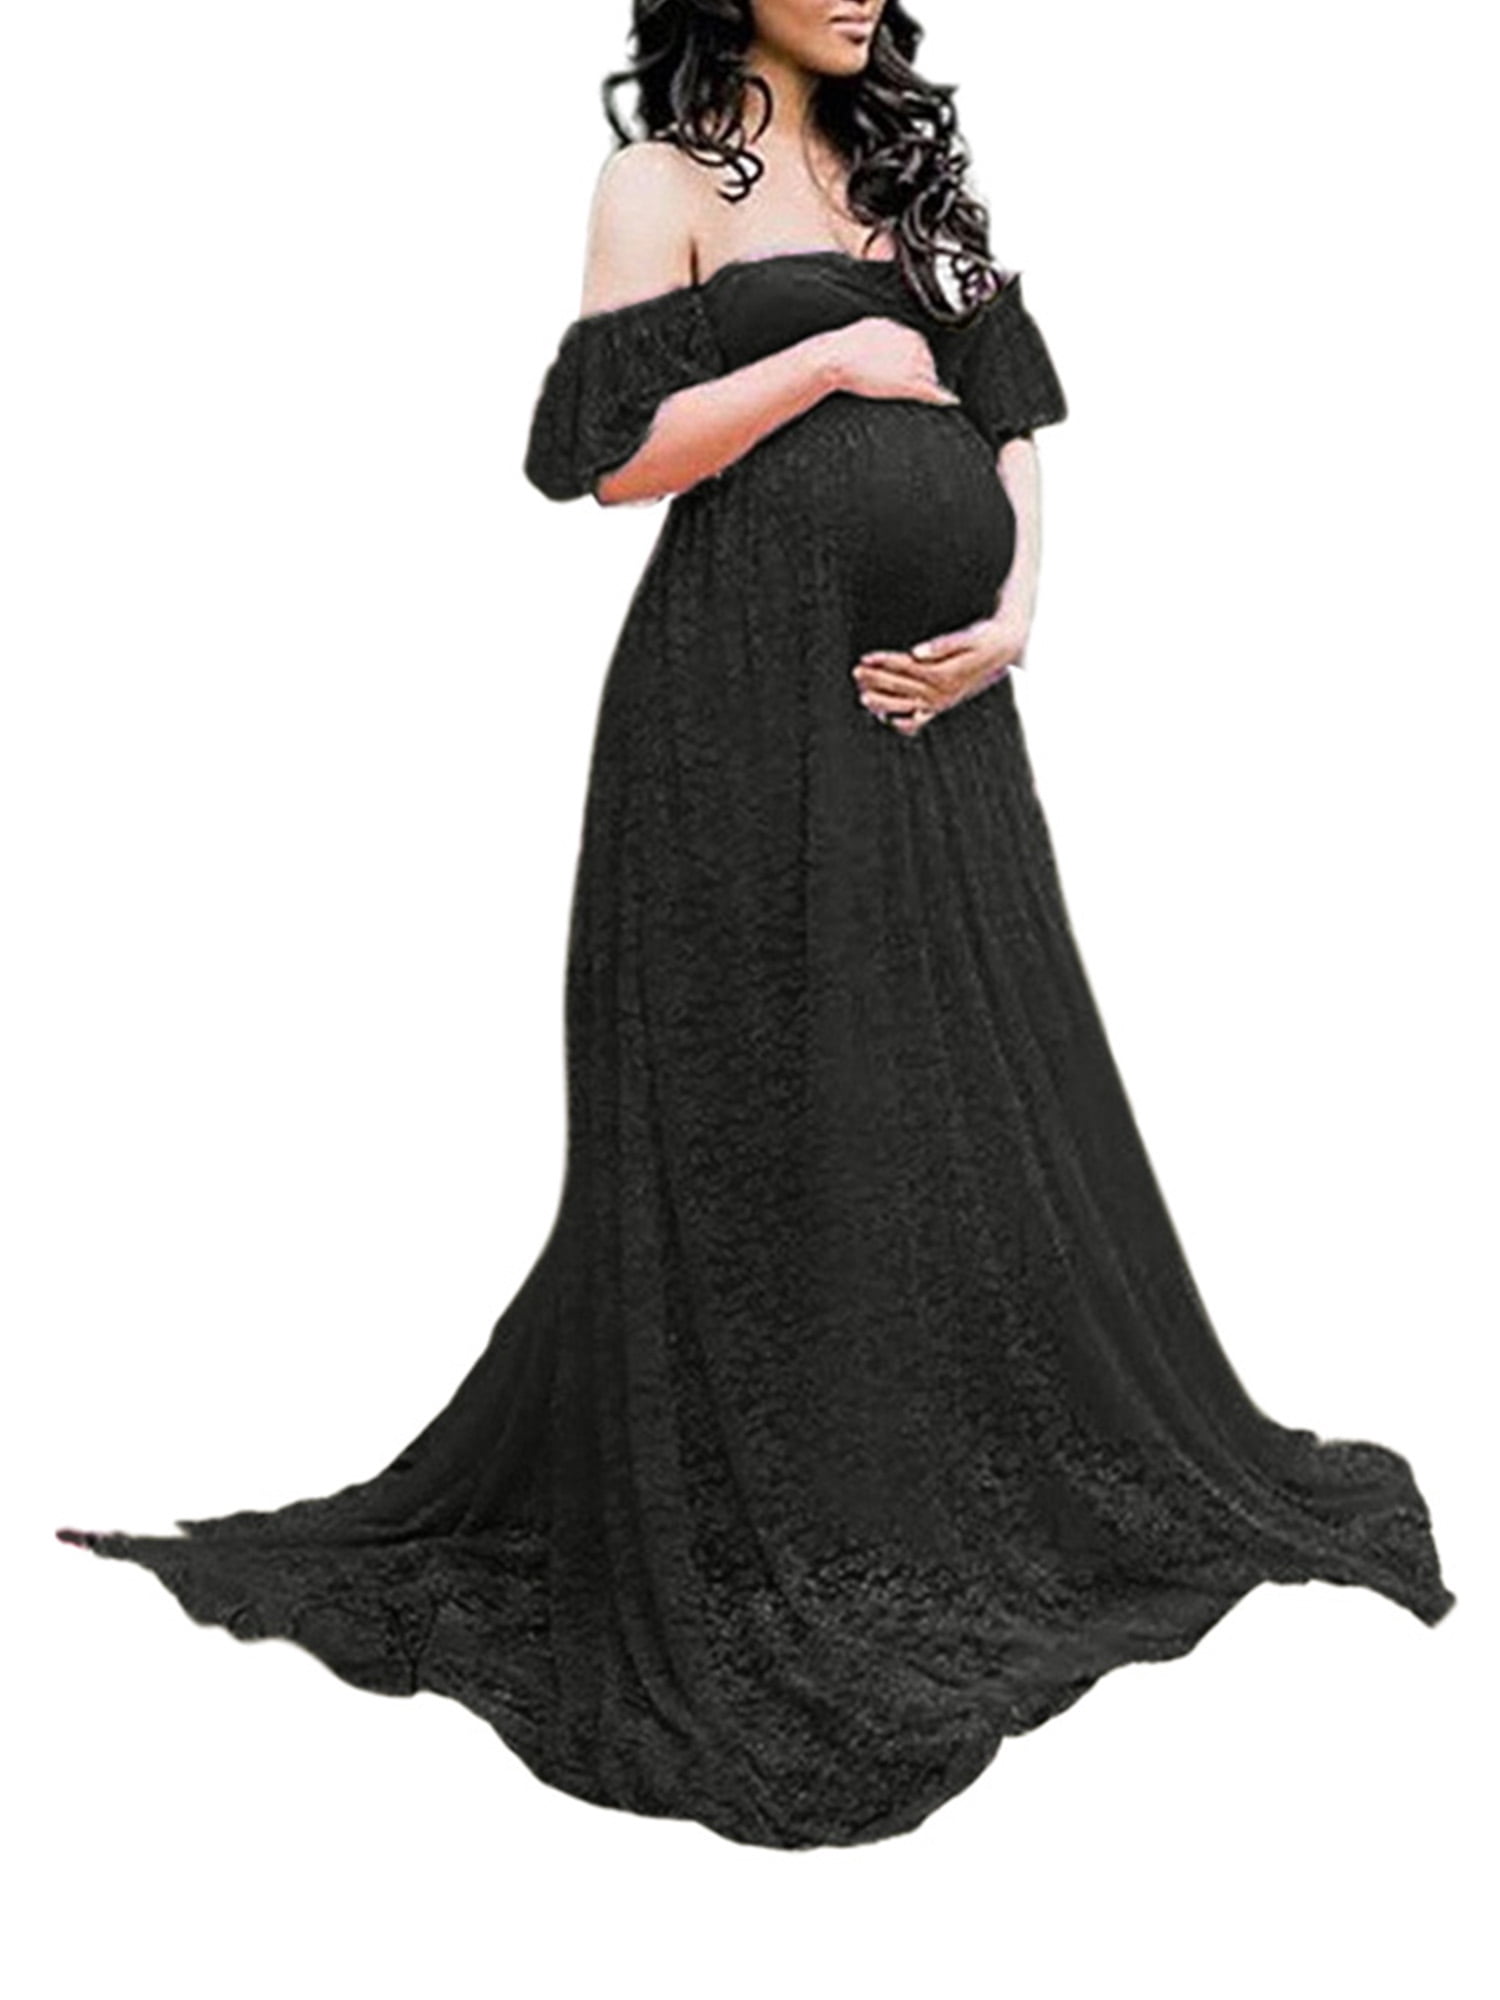 Orange Short Sleeve Maternity Handmade Babyshower Pregnant Wedding S M L XL 